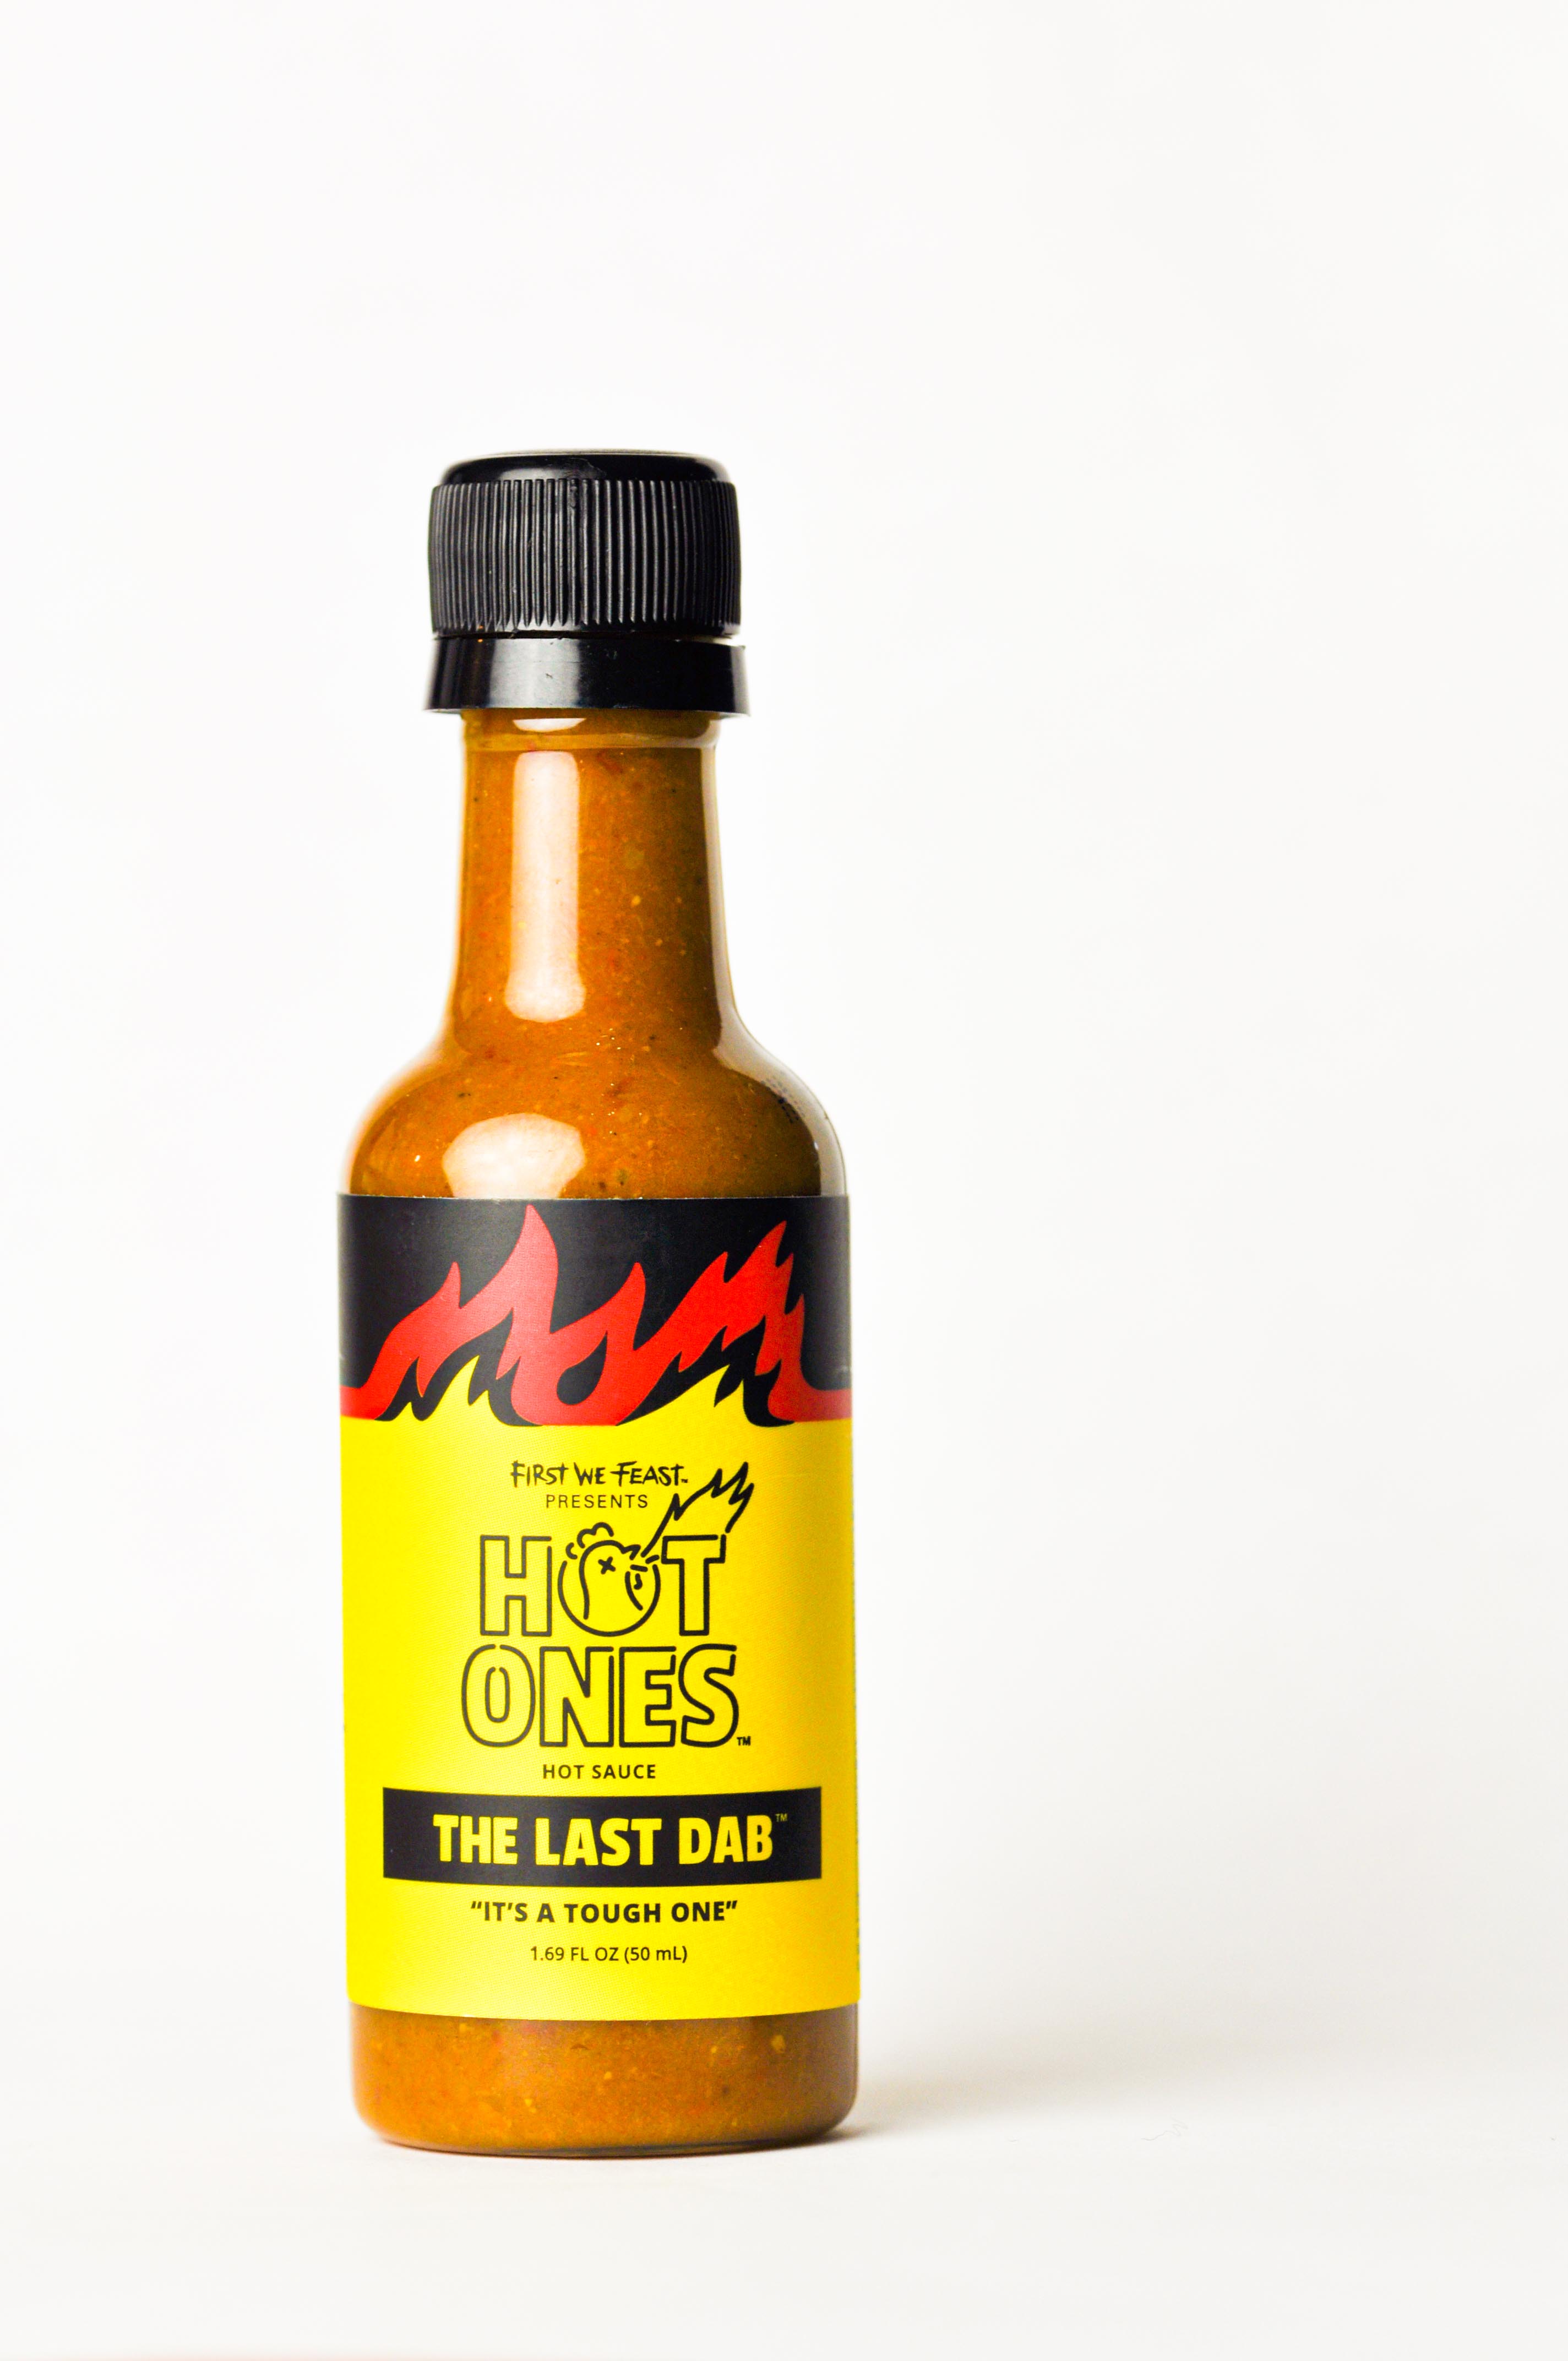 Hot Ones Hot Sauce The Last Dab: Apollo